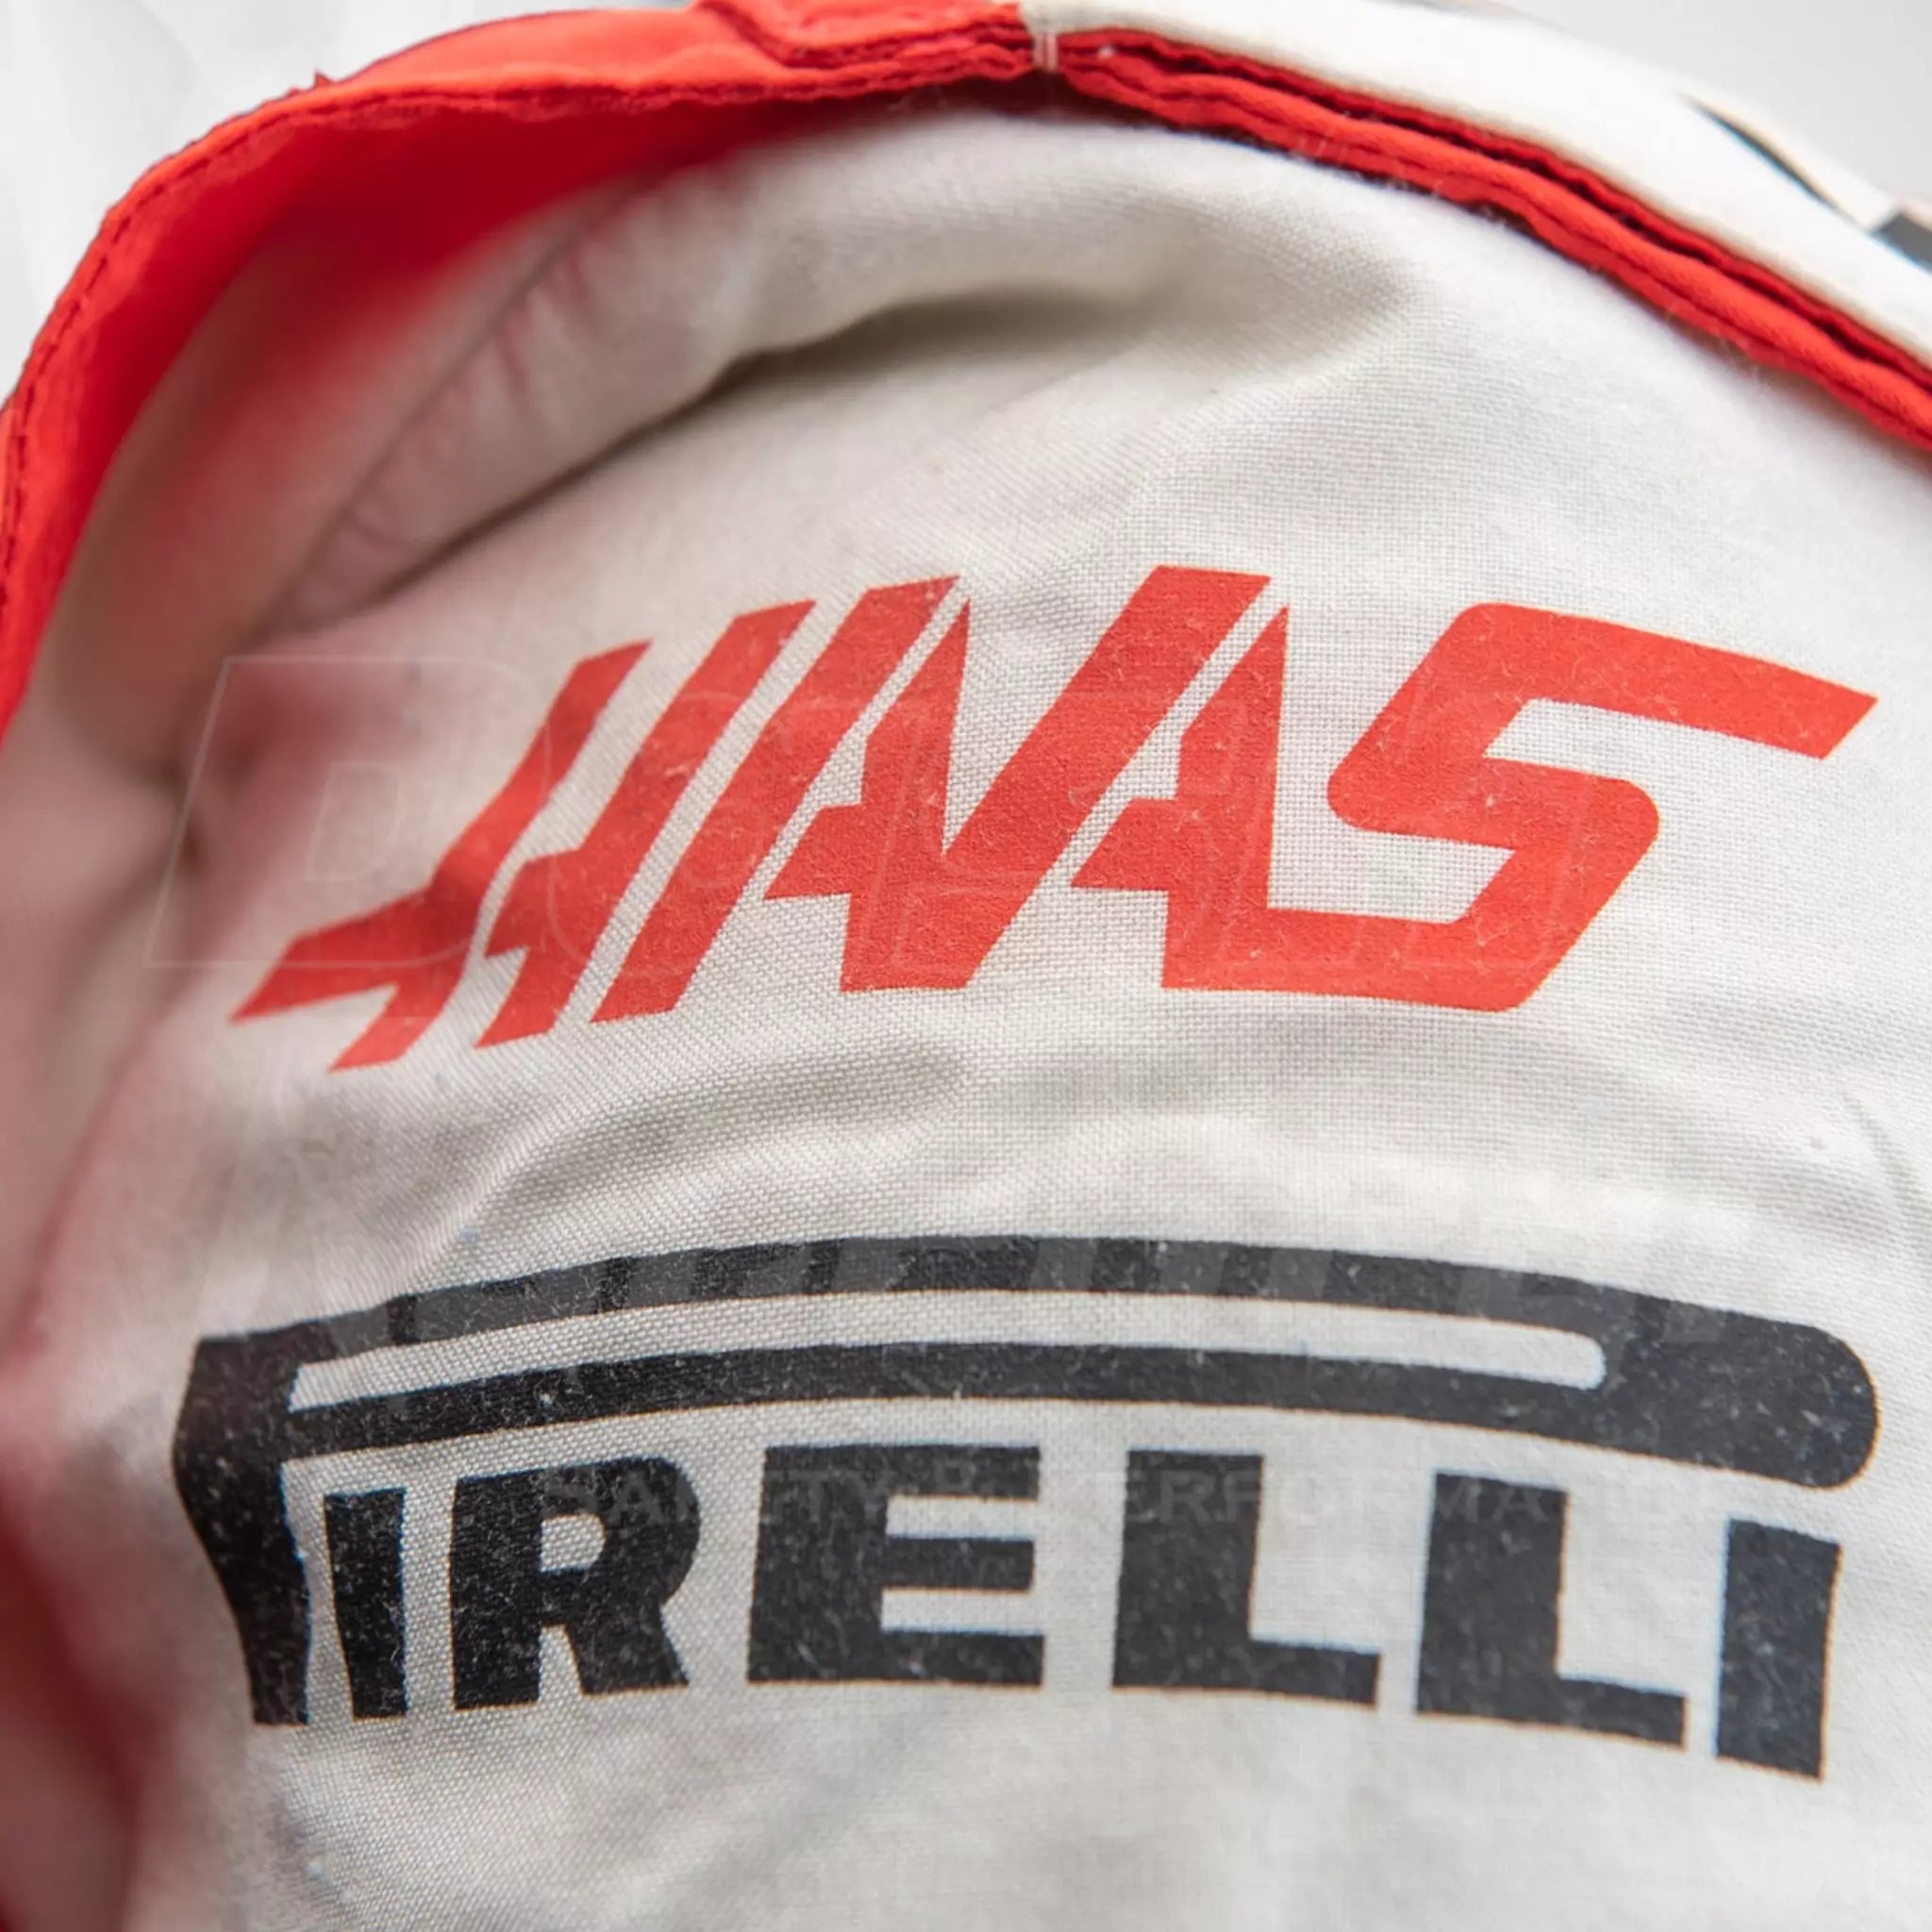 2021 Mick Schumacher Haas Formula 1 Race Suit